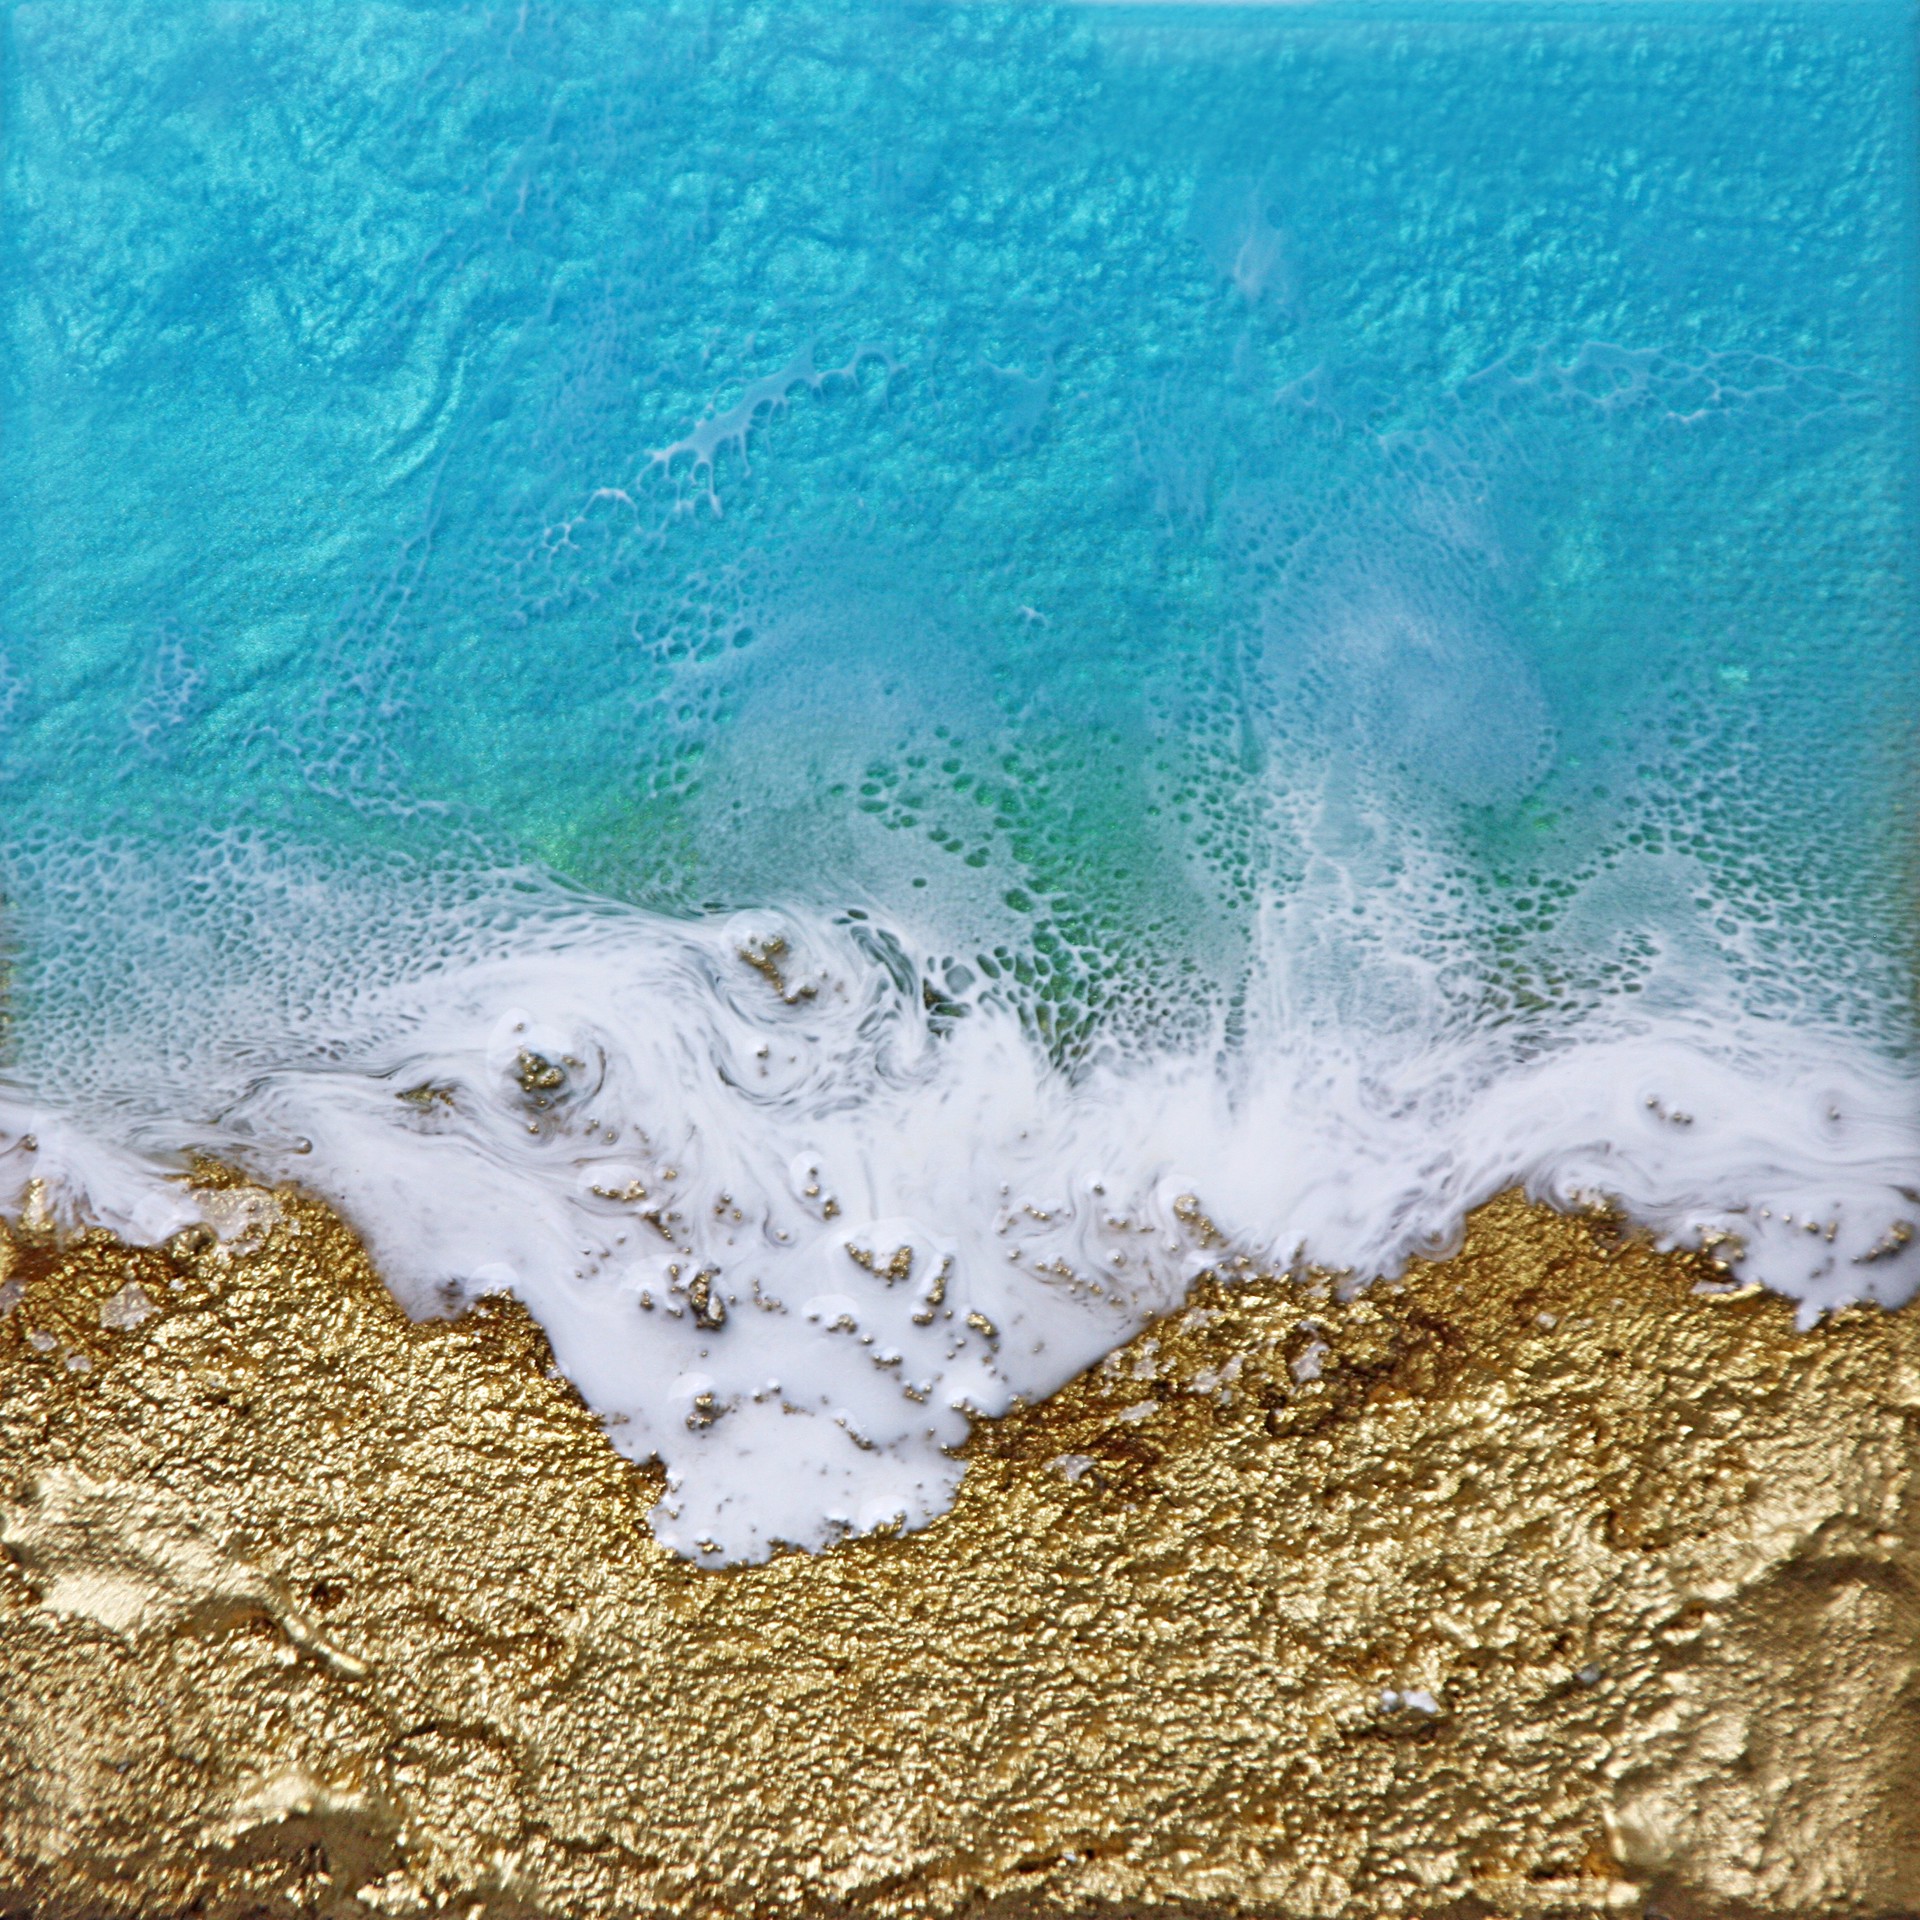 Teal Waves #17 by Ana Hefco